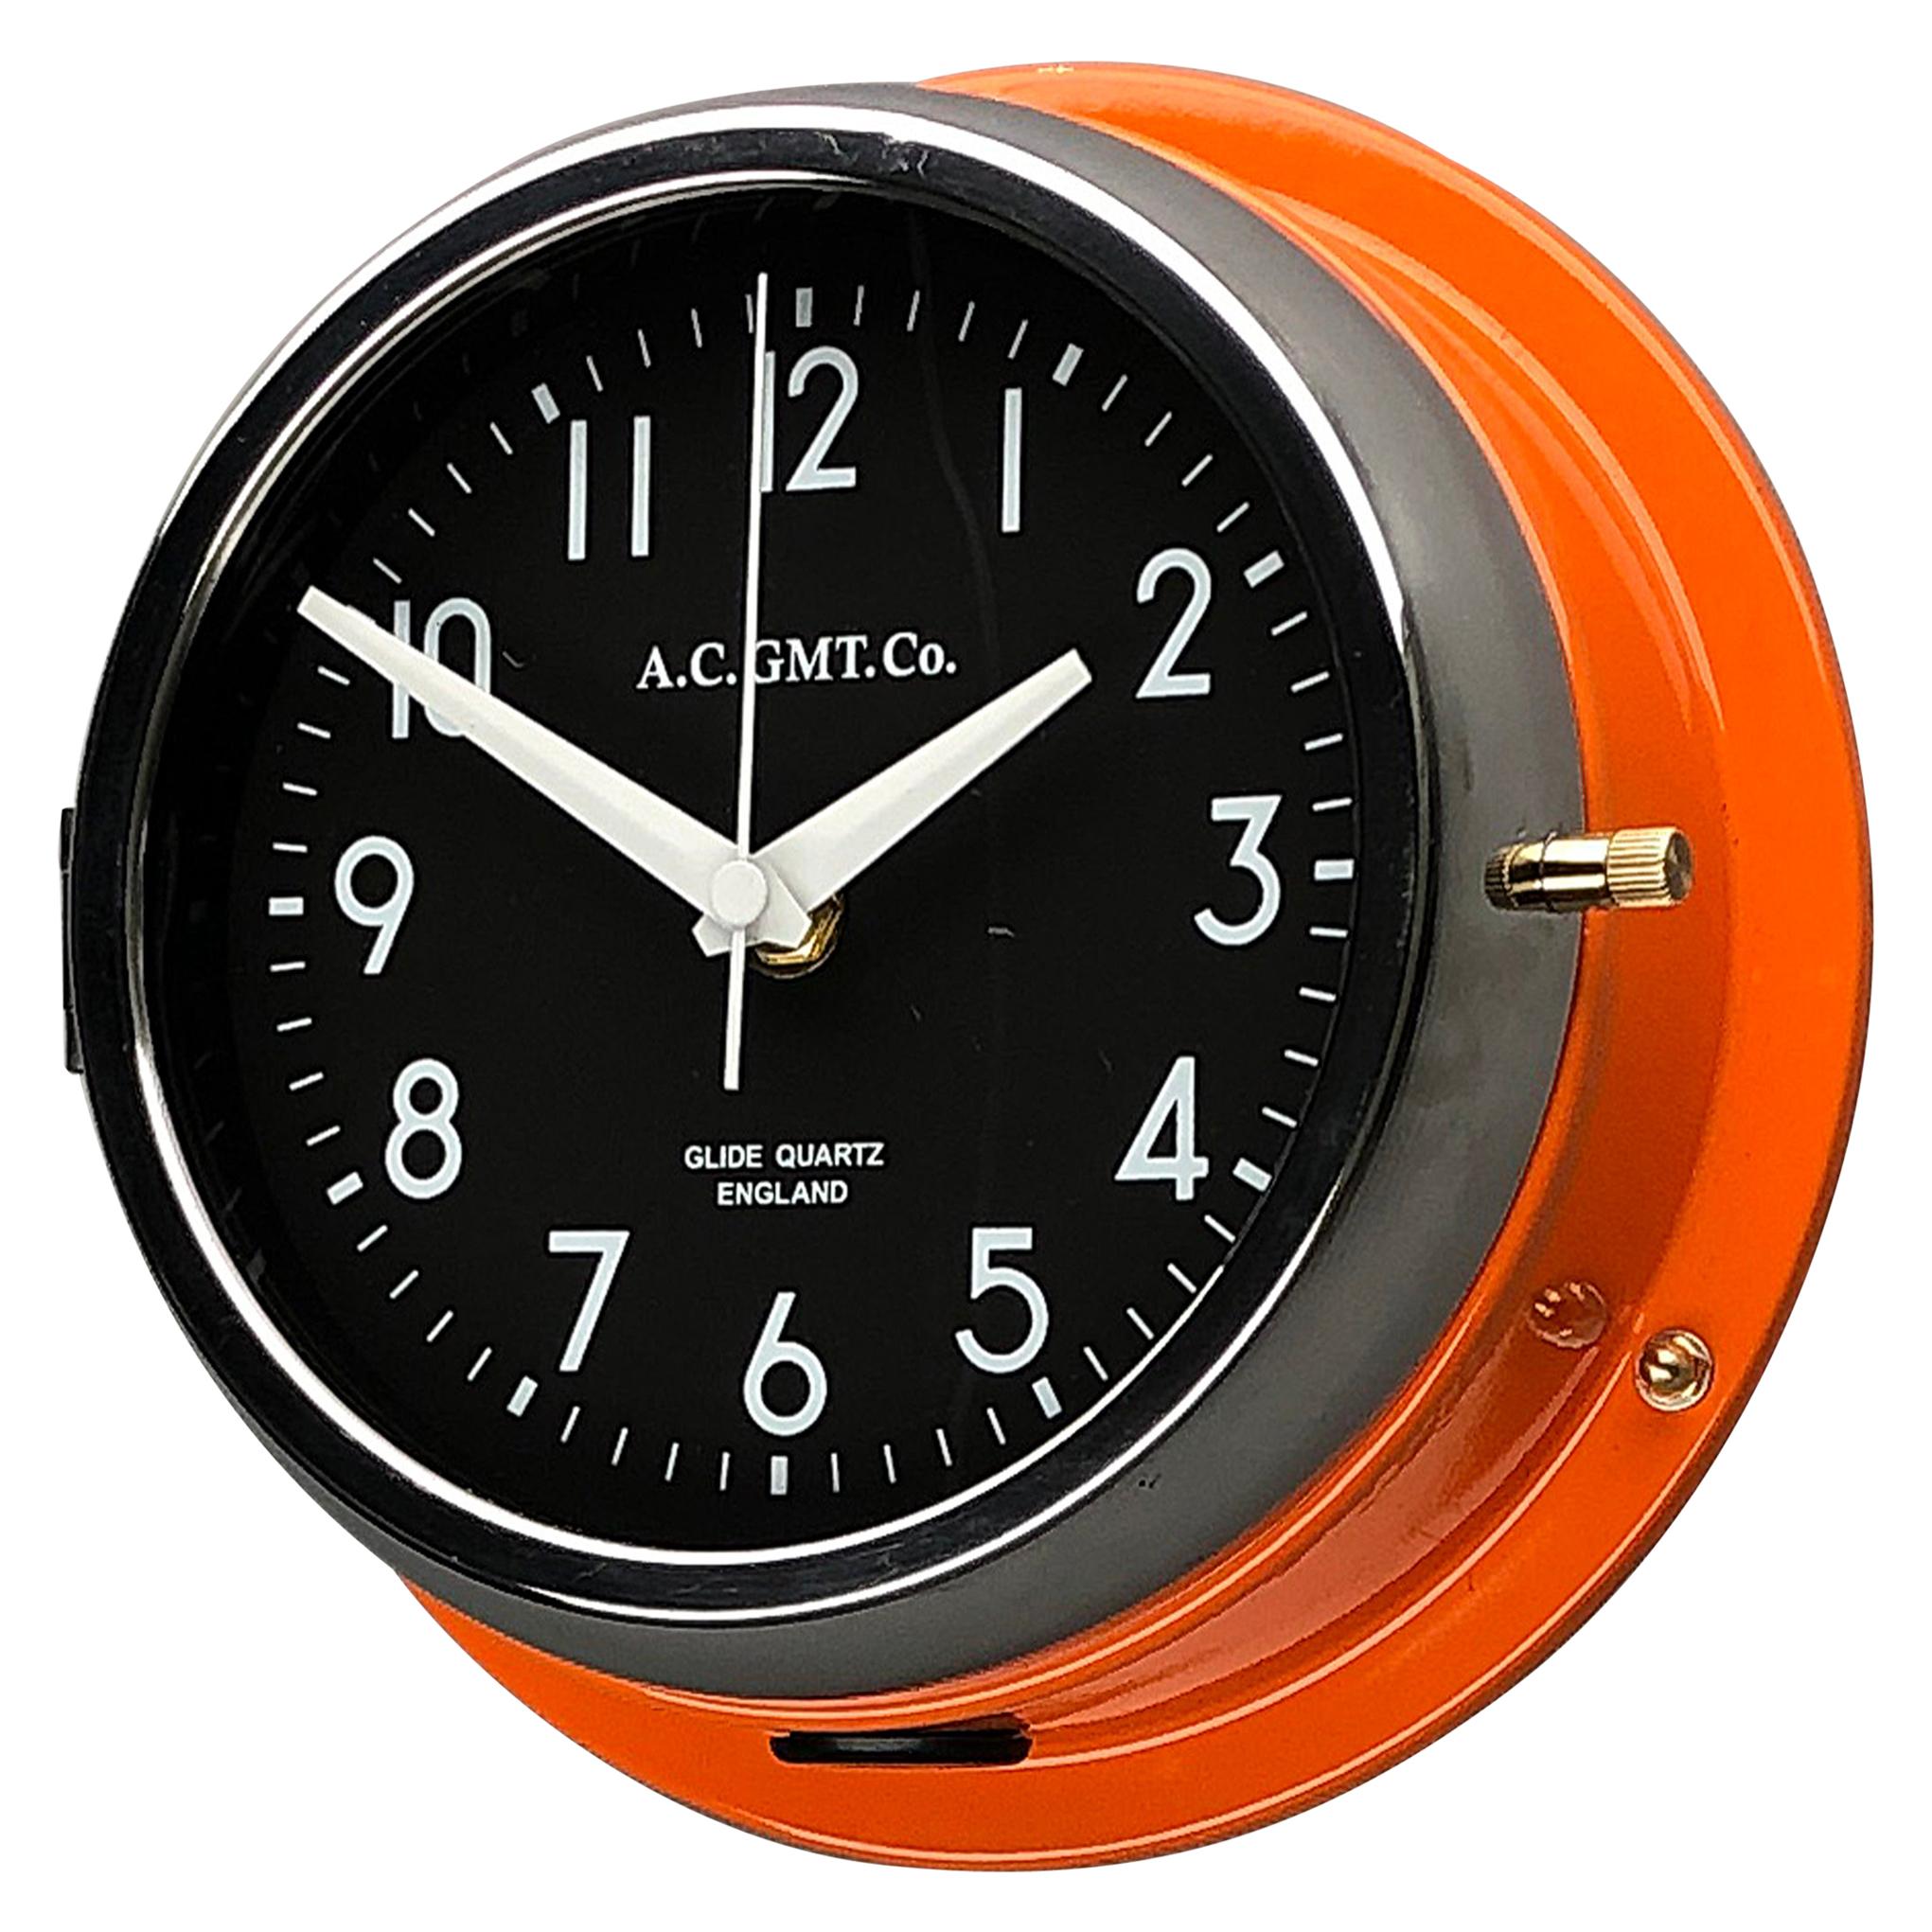 1970s British Orange & Chrome AC GMT Co. Industrial Wall Clock Black Dial